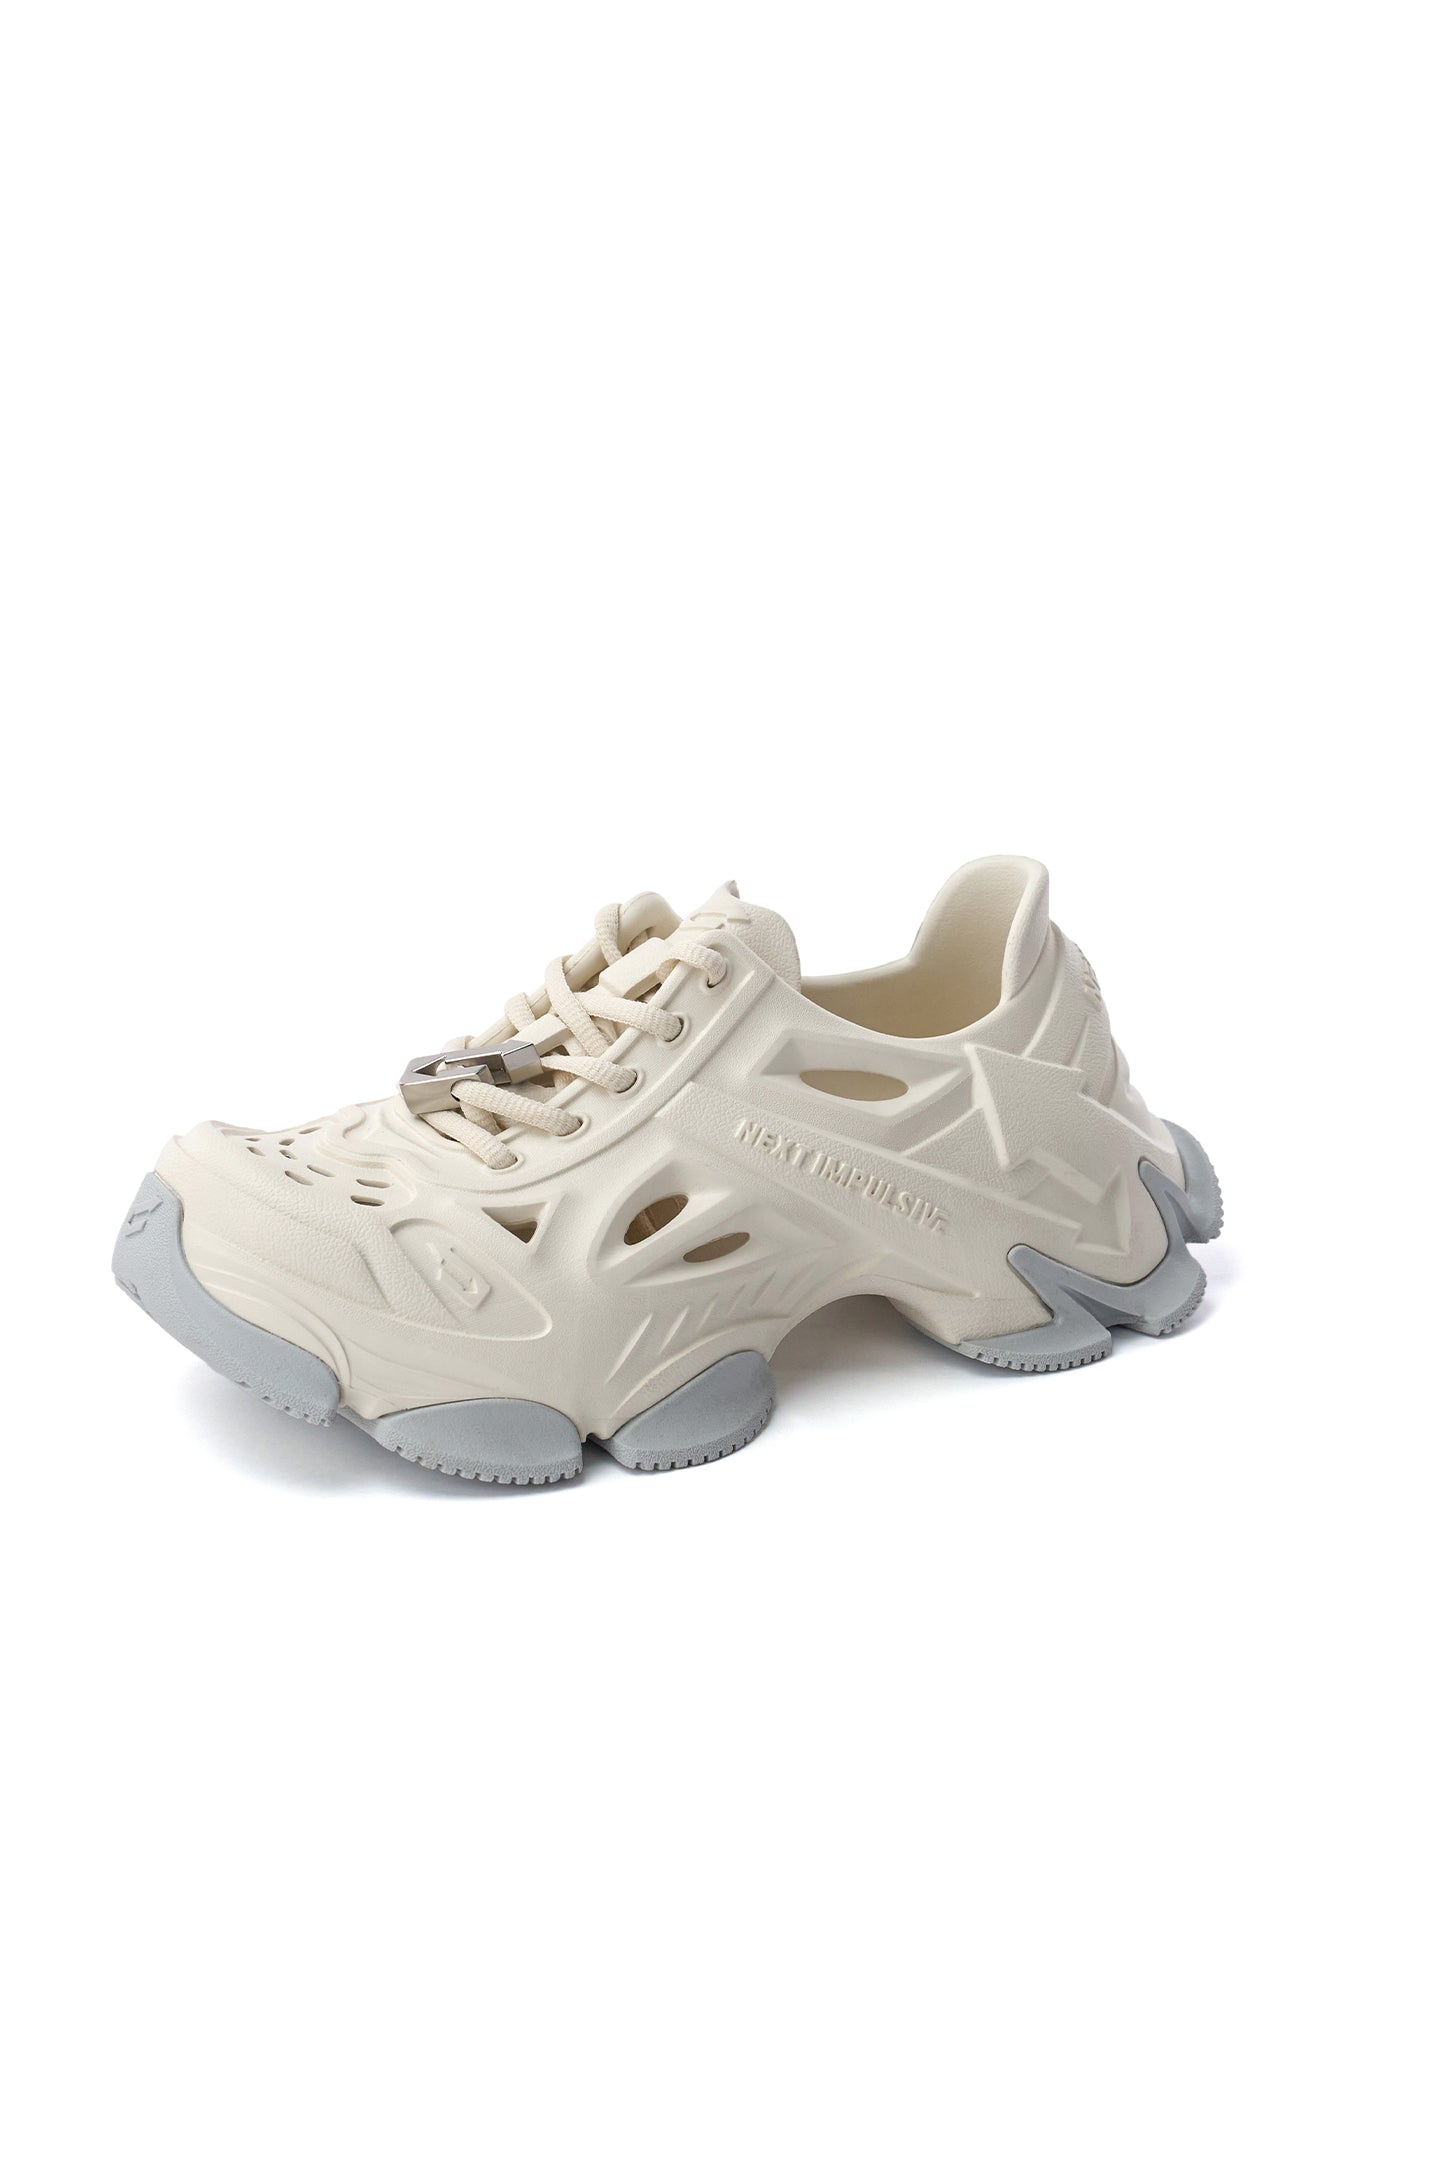 Time Space Series-Dad Crocs Shoes - PSYLOS 1, Time Space Series-Dad Crocs Shoes, Shoes, NEXT IMPULSIVE, PSYLOS 1